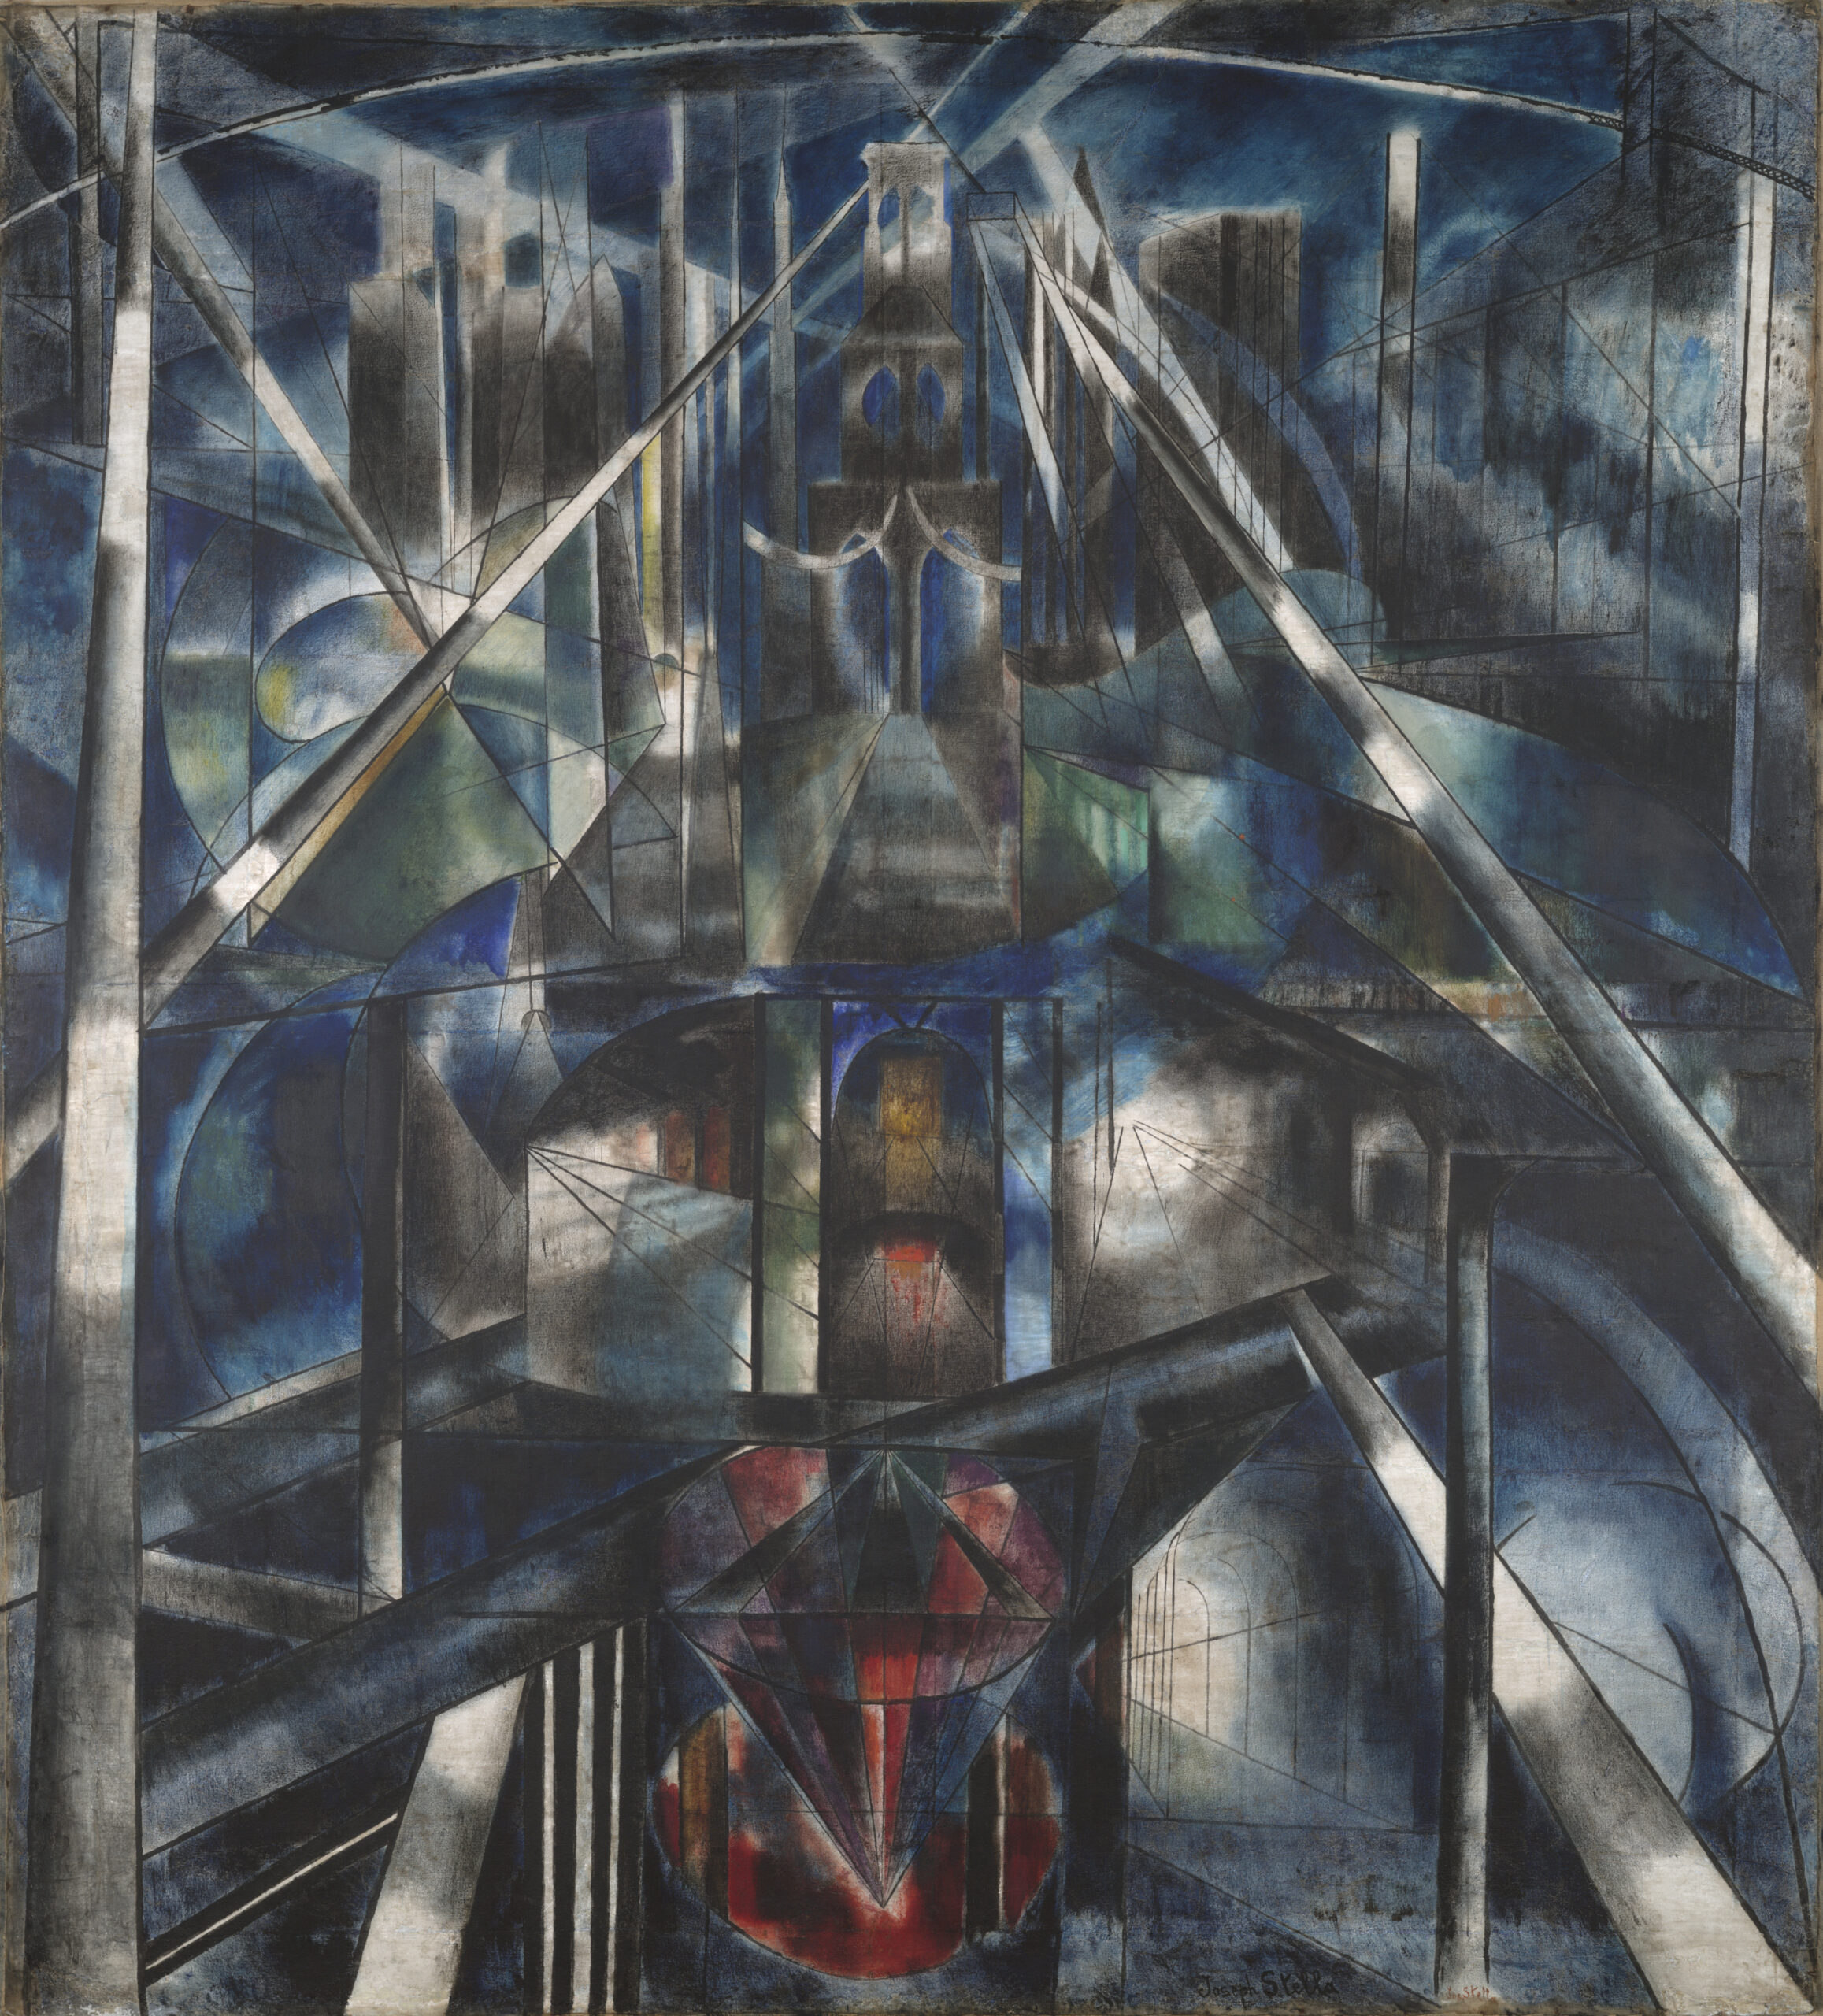 Joseph Stella, Brooklyn Bridge, 1919 - 1920, huile sur toile, 215,3 × 194,6 cm, Yale University Art Gallery, New Haven